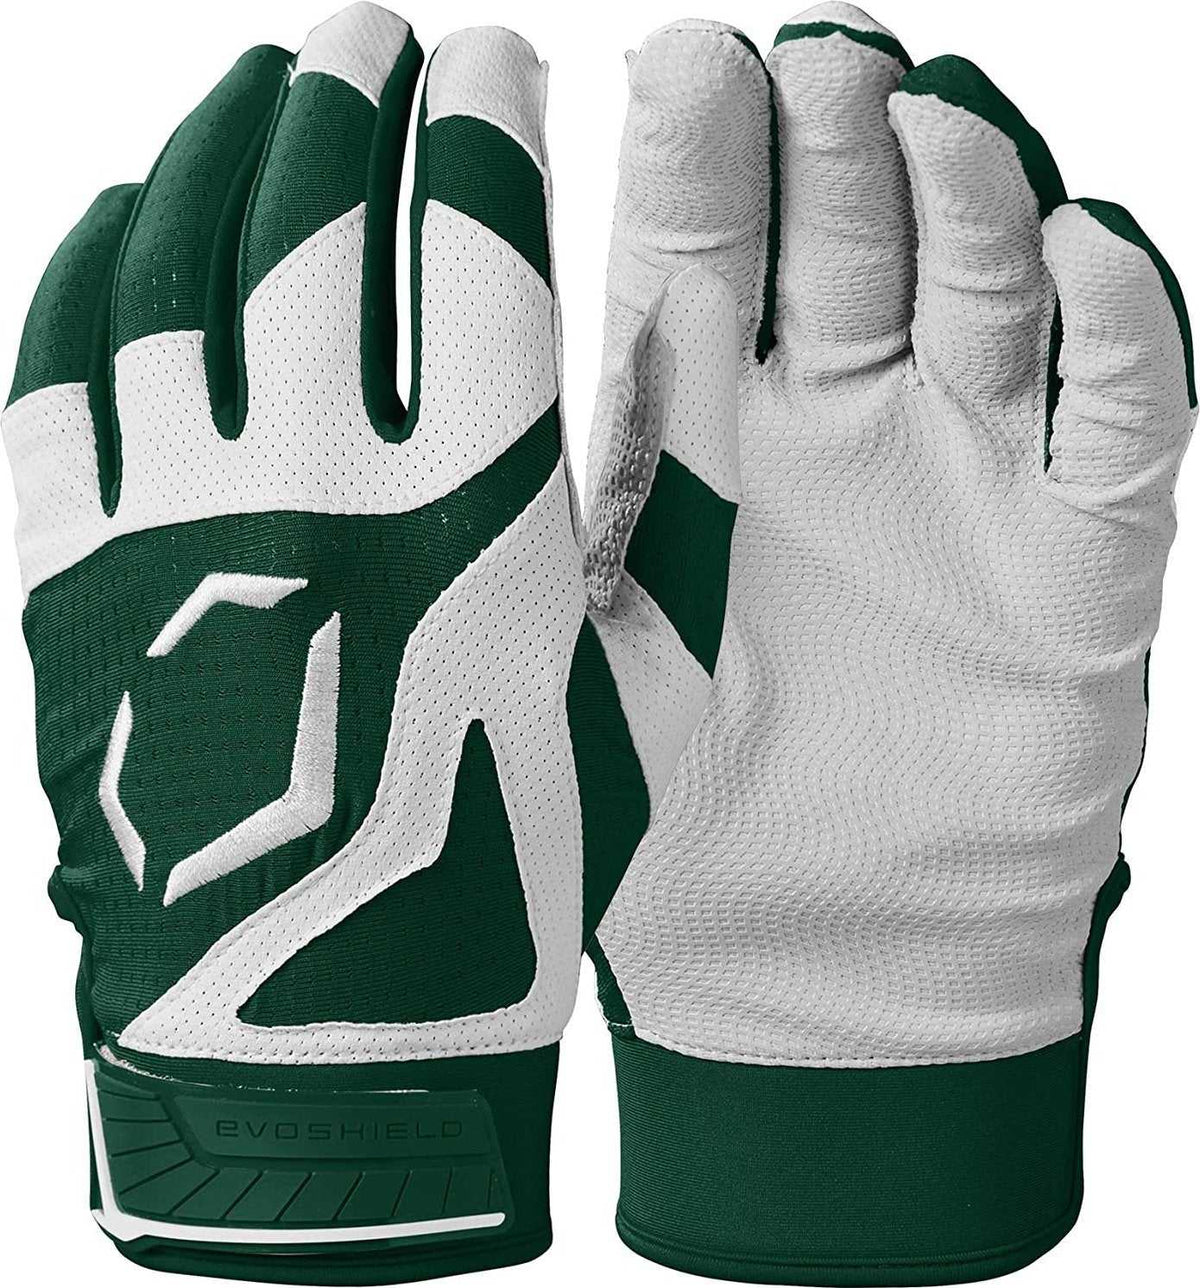 EvoShield Youth SRZ-1 Batting Gloves - Dark Green - HIT A Double